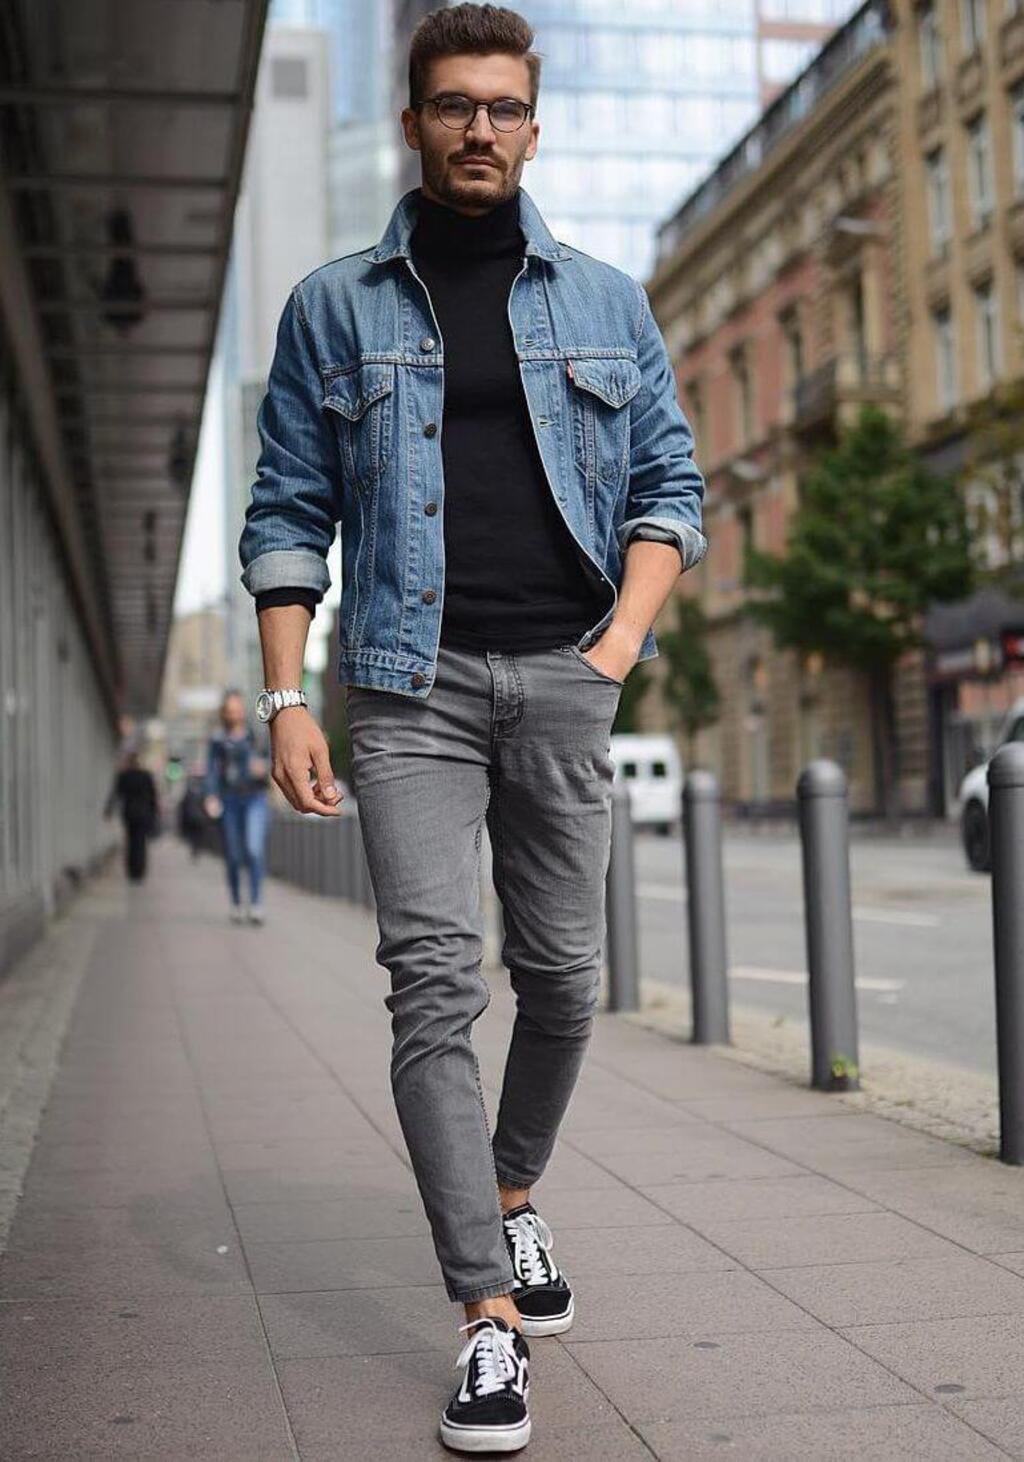 How to Wear a Denim Jacket for Guys Modern Outfit Ideas  Mens fashion  denim Men fashion casual outfits How to wear denim jacket